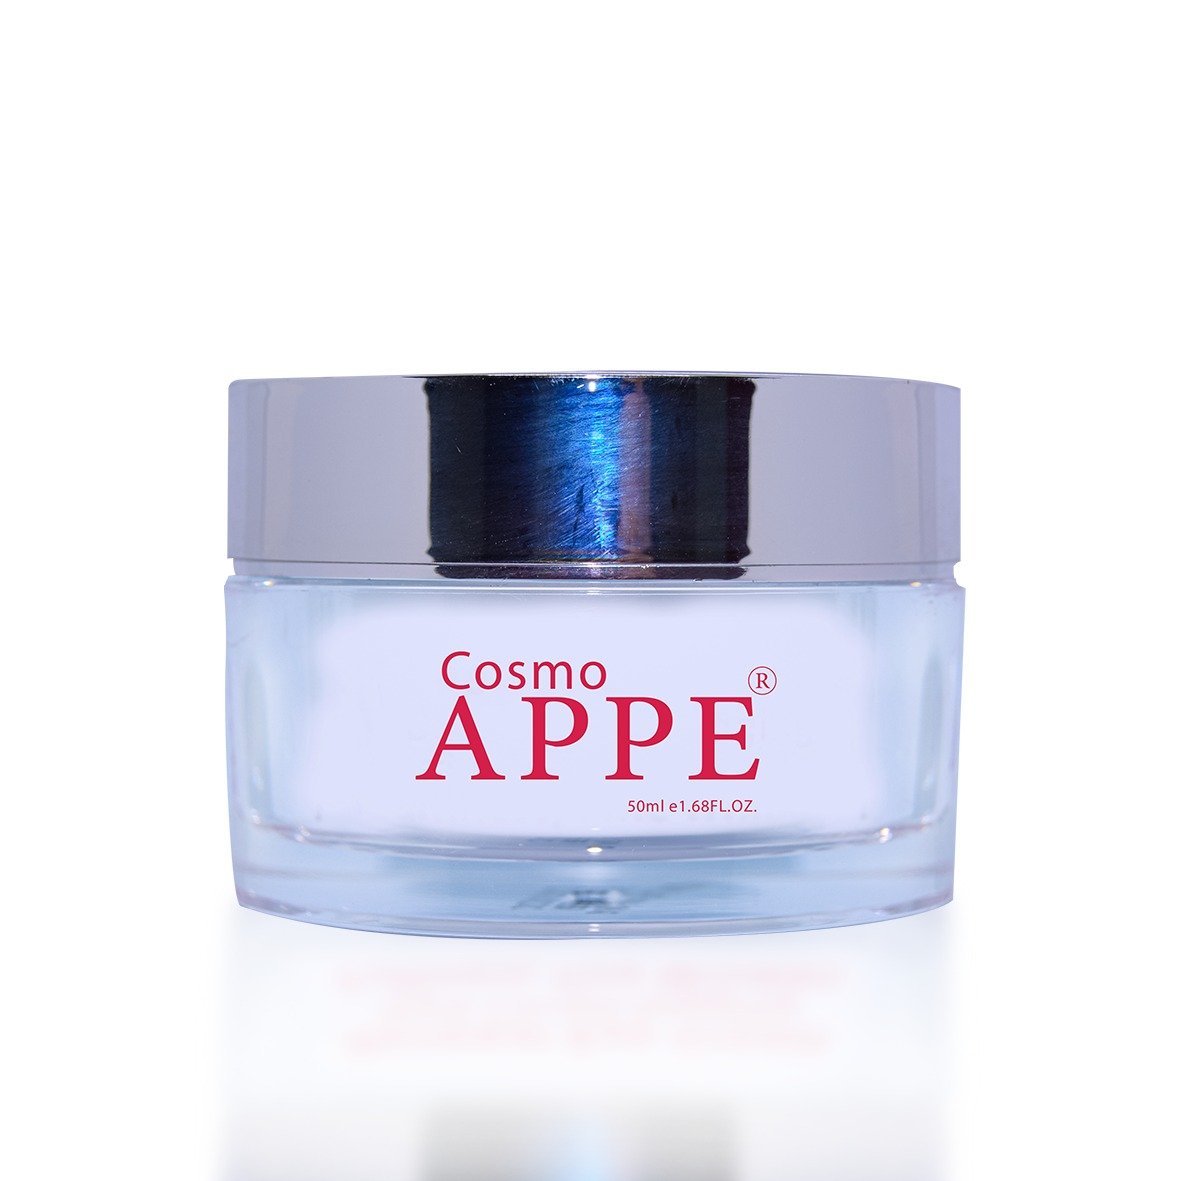 APPE® Renewal Face Cream - Appearance Factors